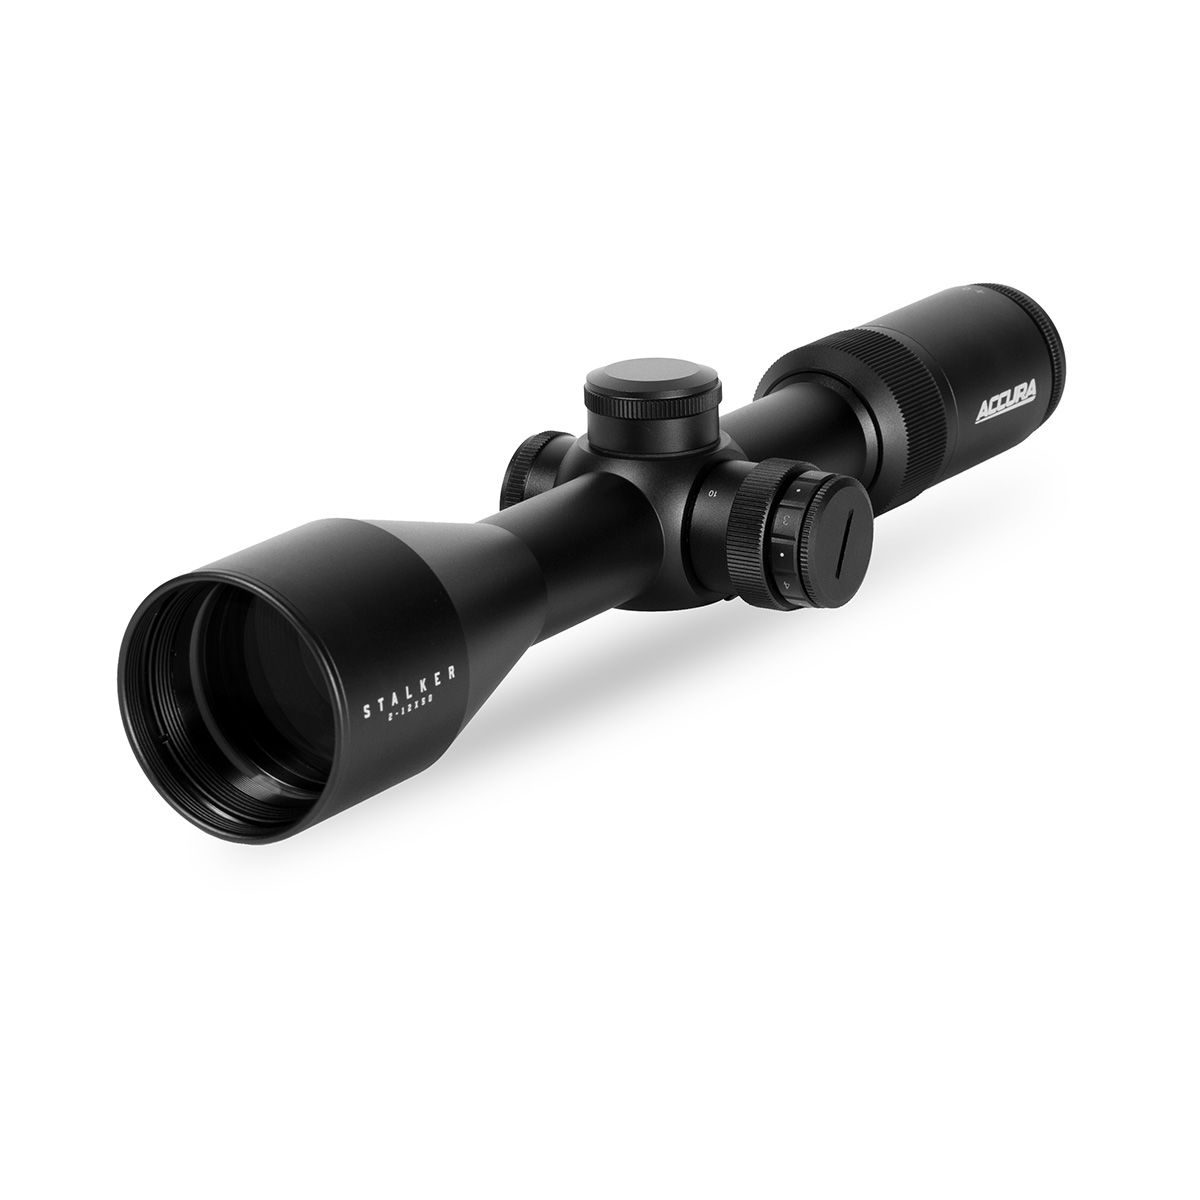 Accura Stalker 2-12x50 30mm RX Illuminated Riflescope